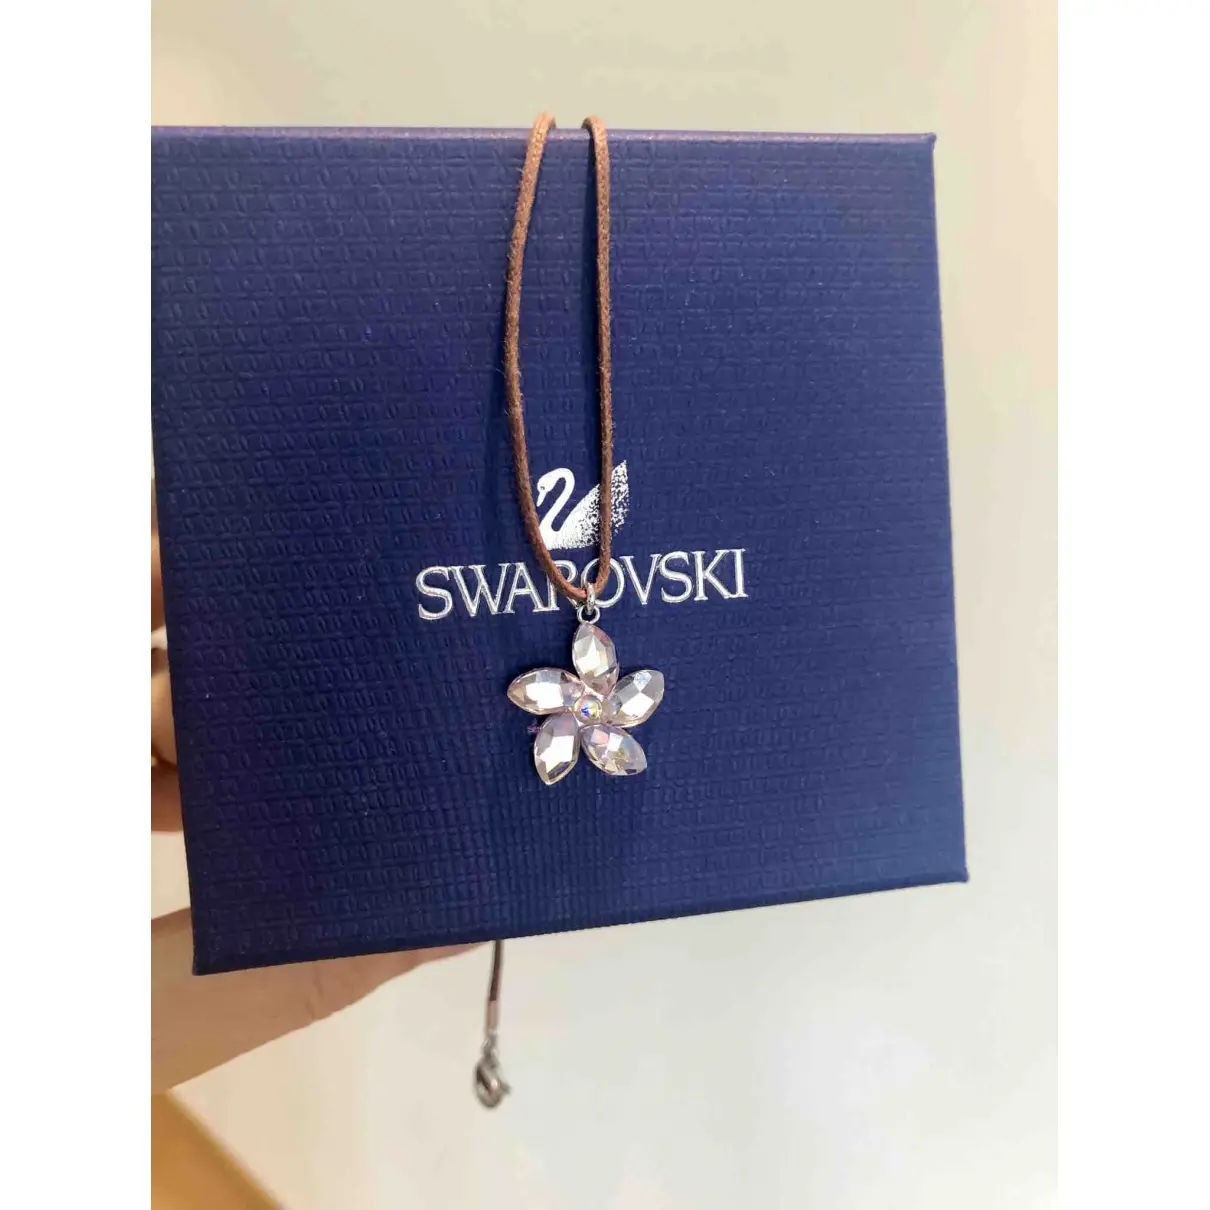 Swarovski Crystal pendant for sale